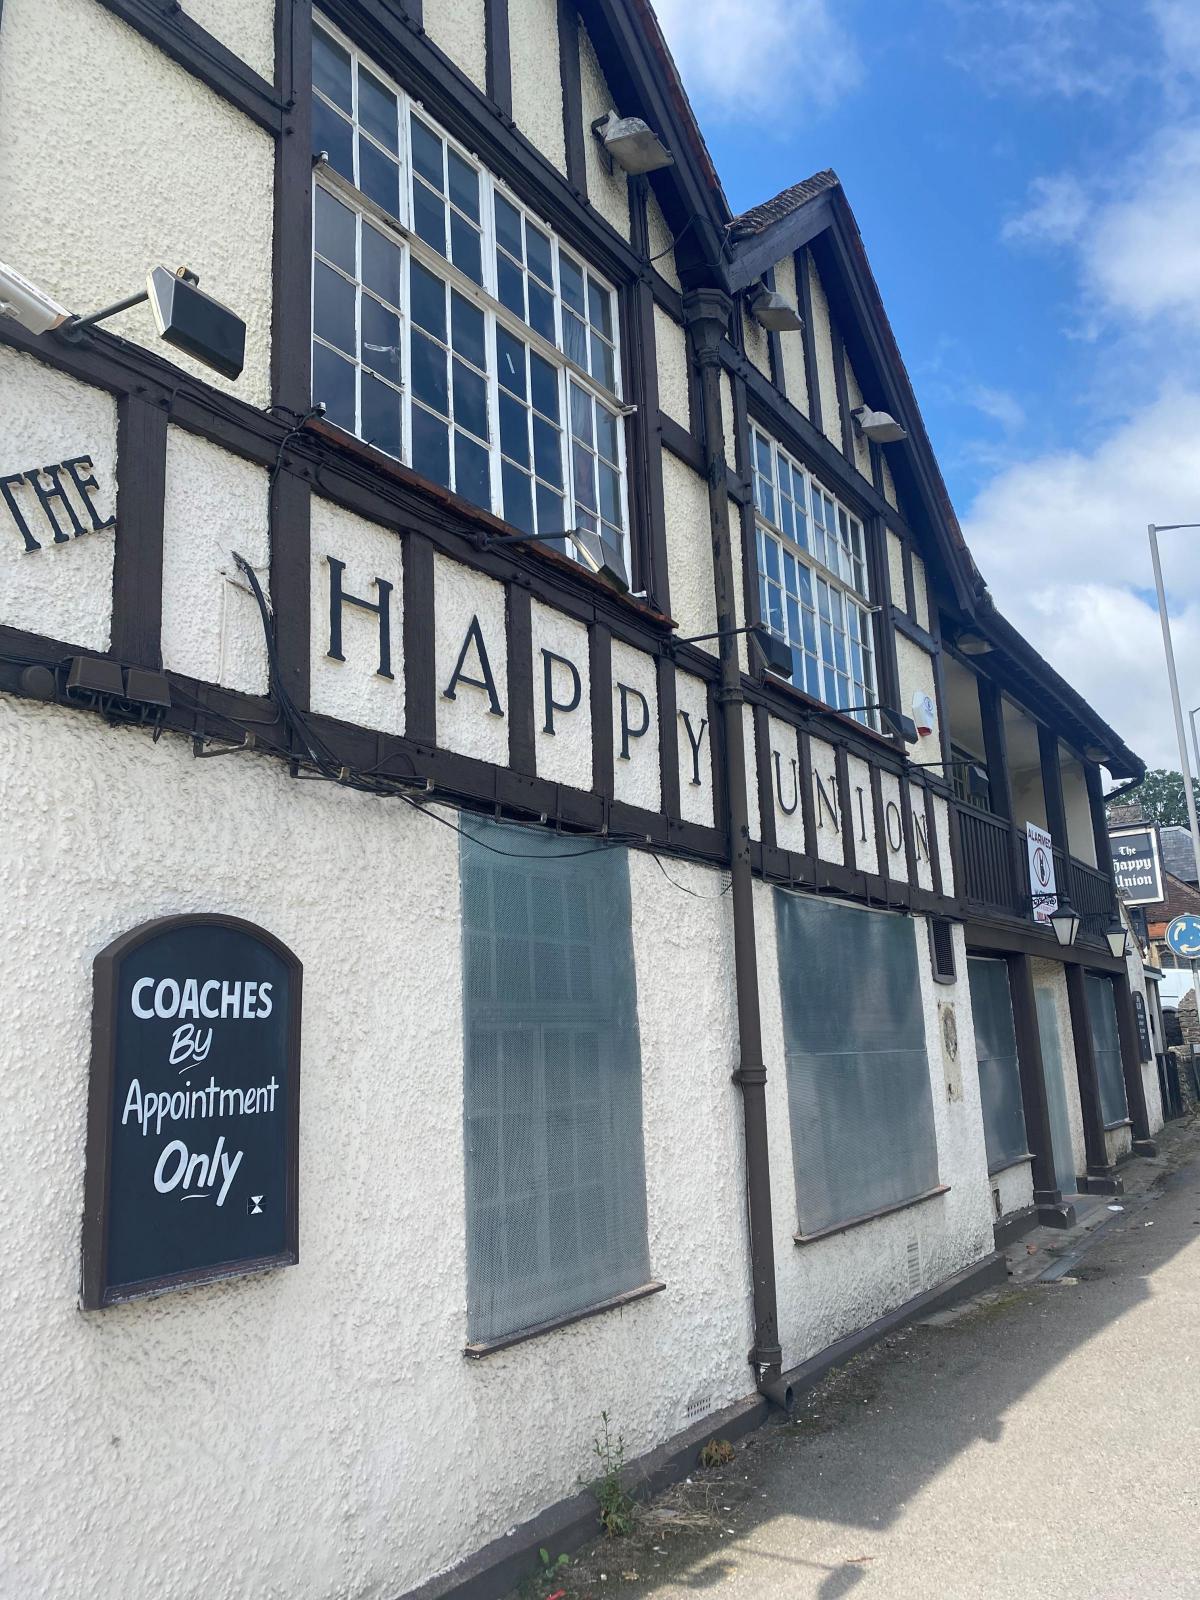 The Happy Union pub